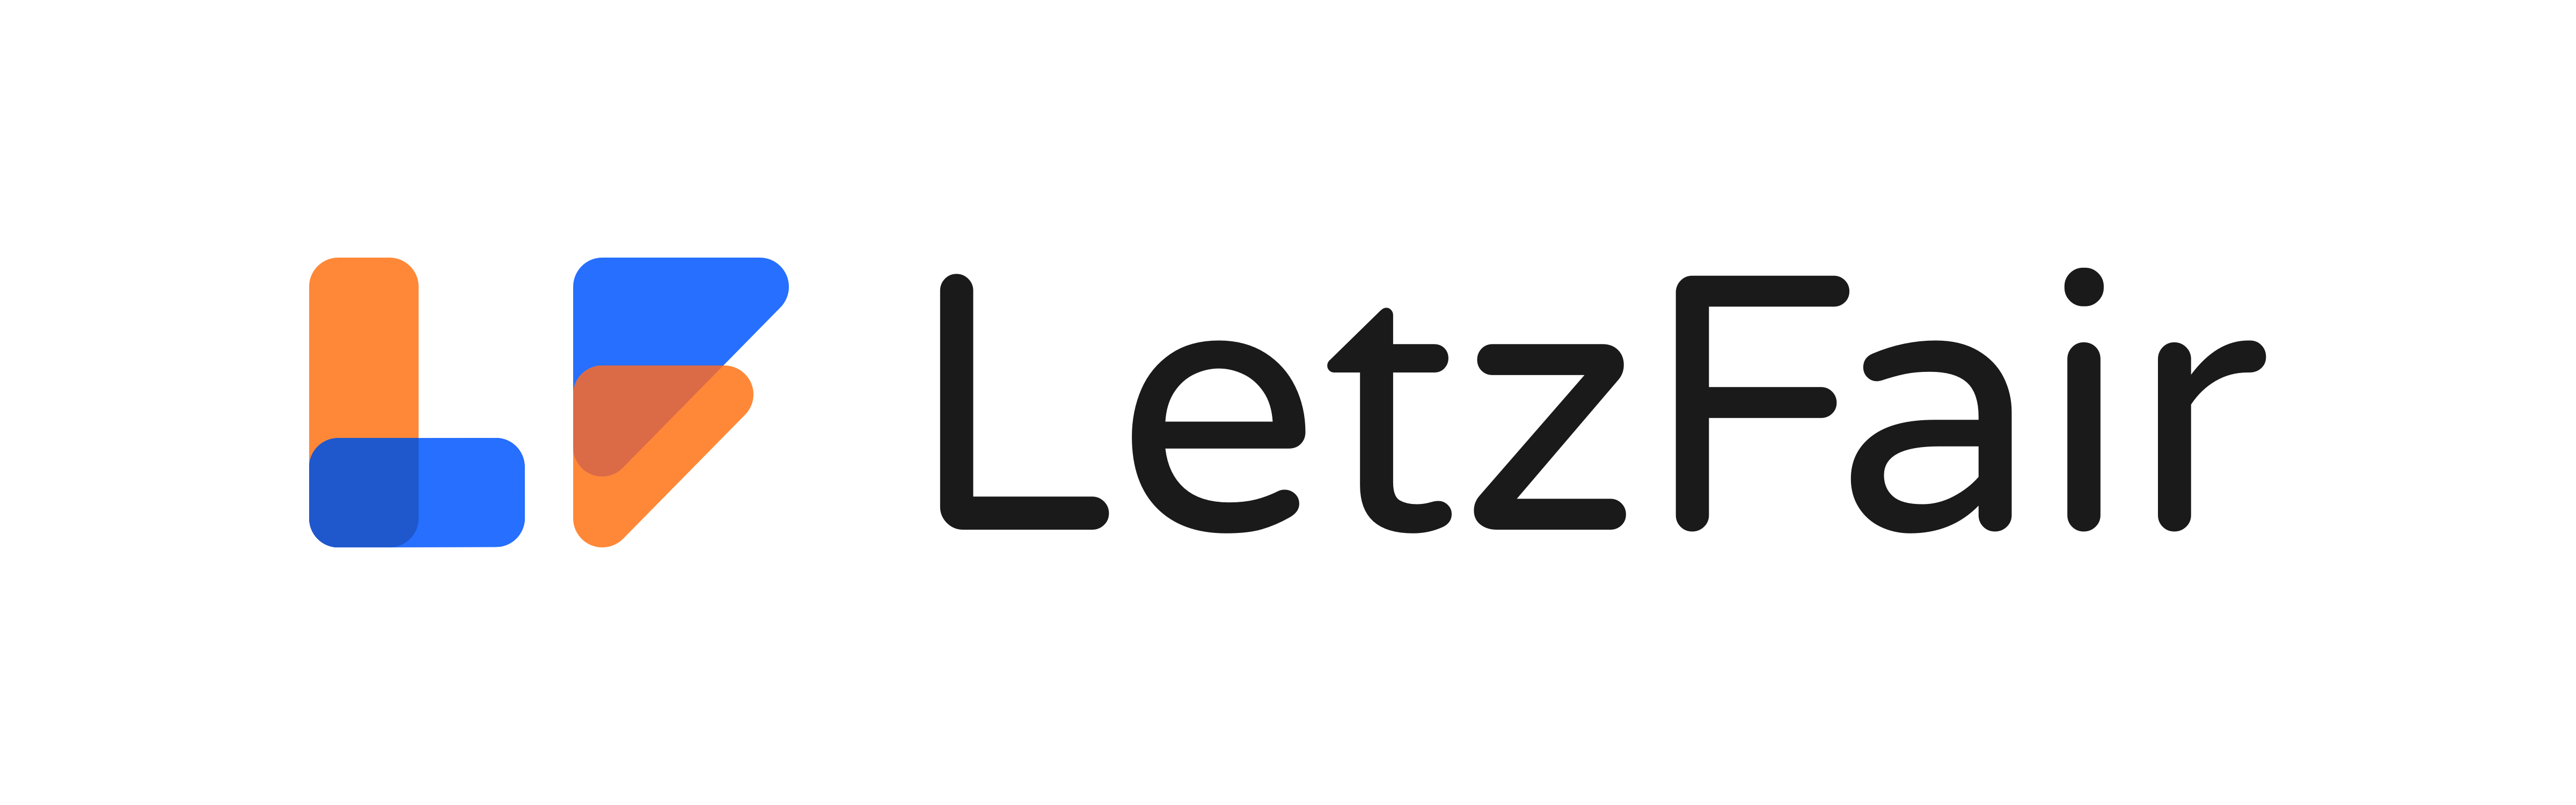 LetzFair